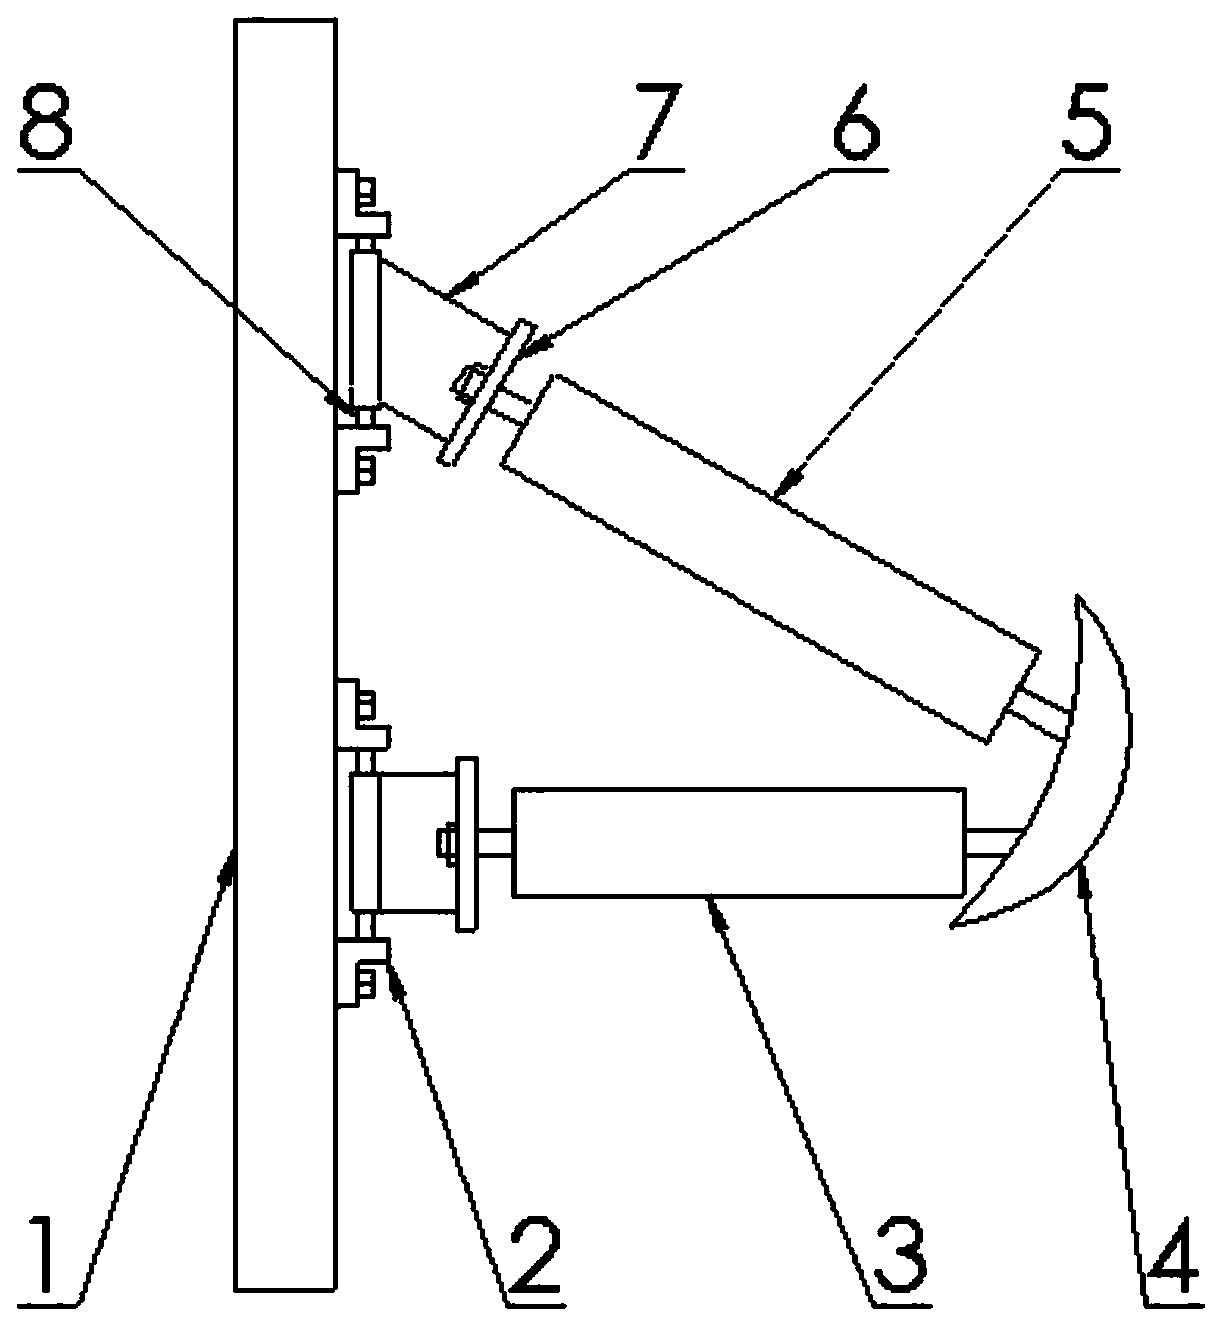 Composite rotary cross arm